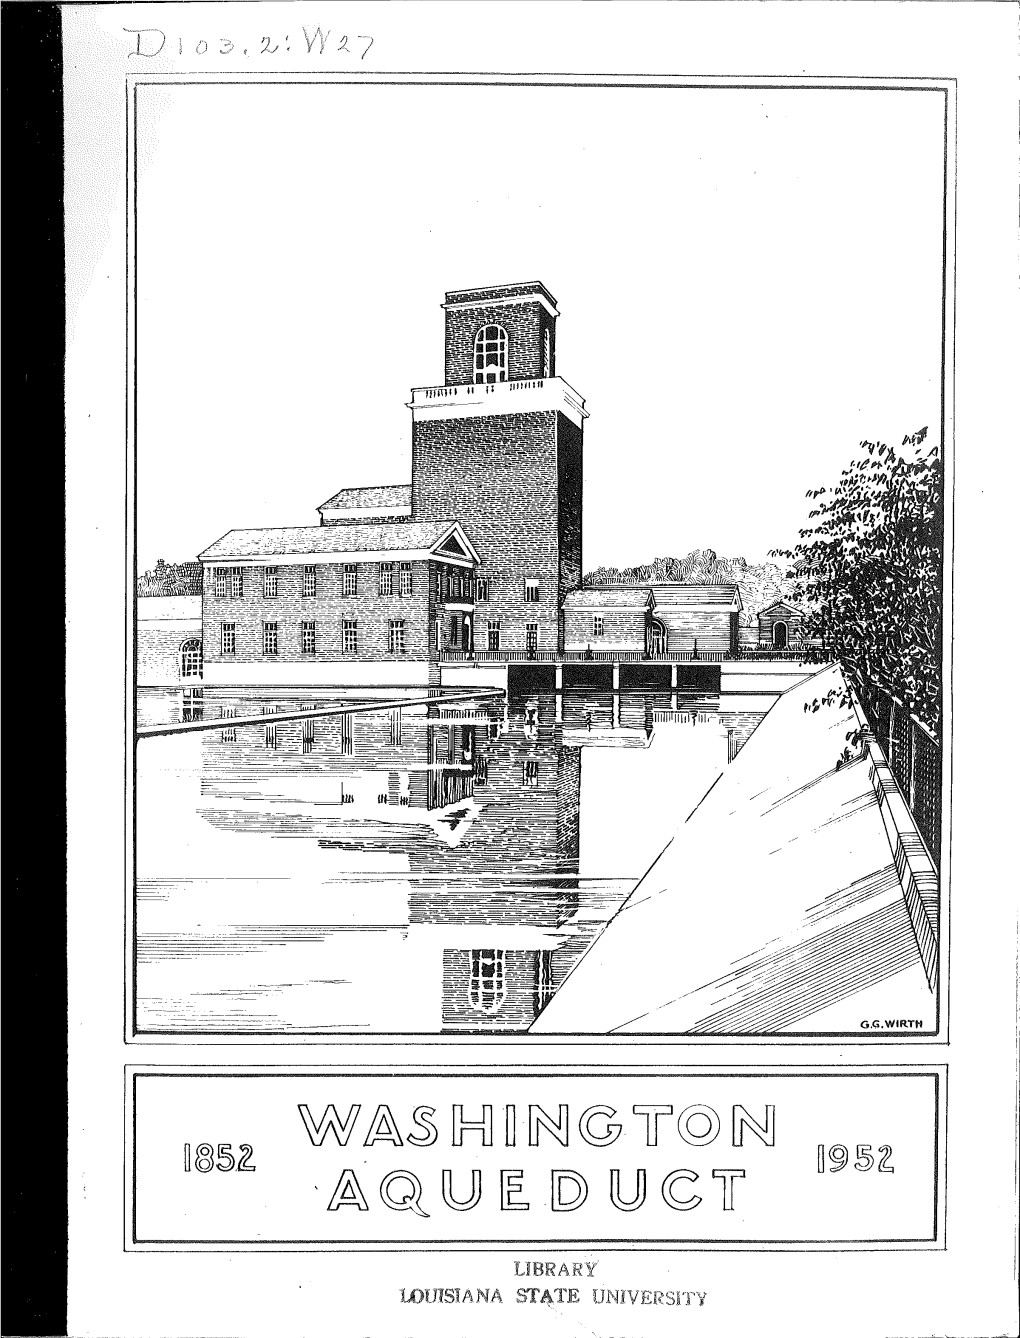 History of the Washington Aqueduct